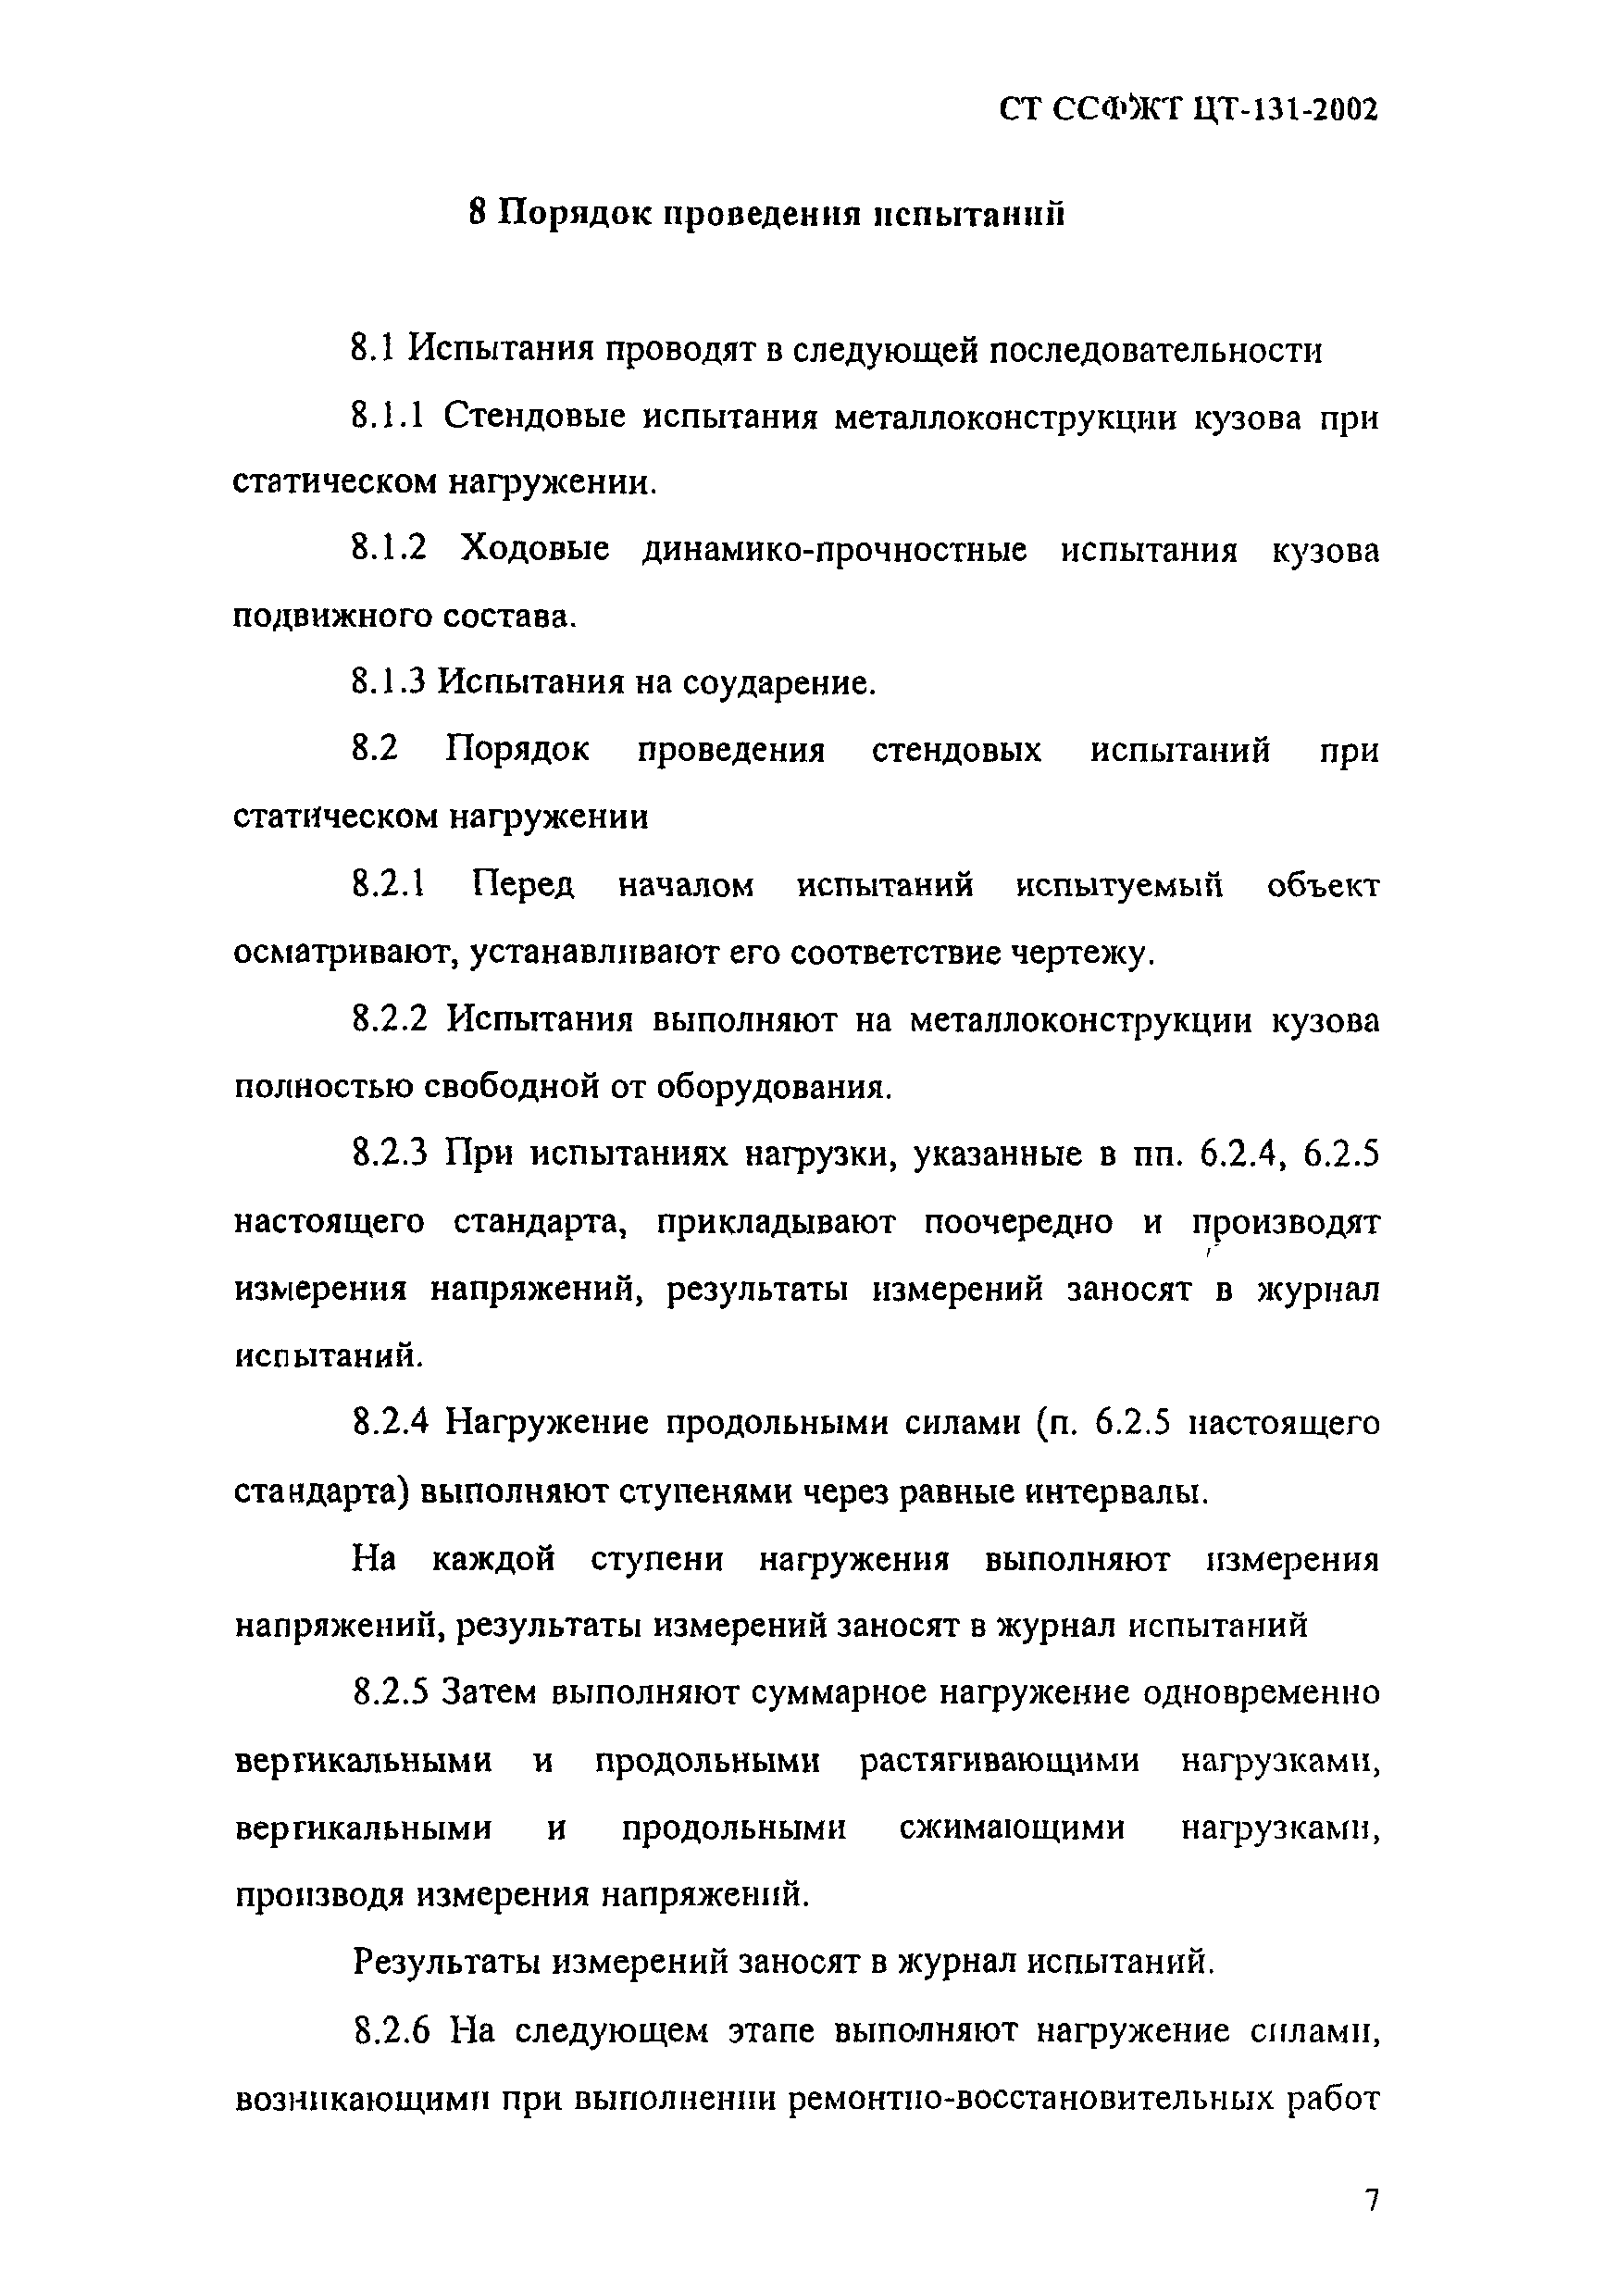 СТ ССФЖТ ЦТ-131-2002